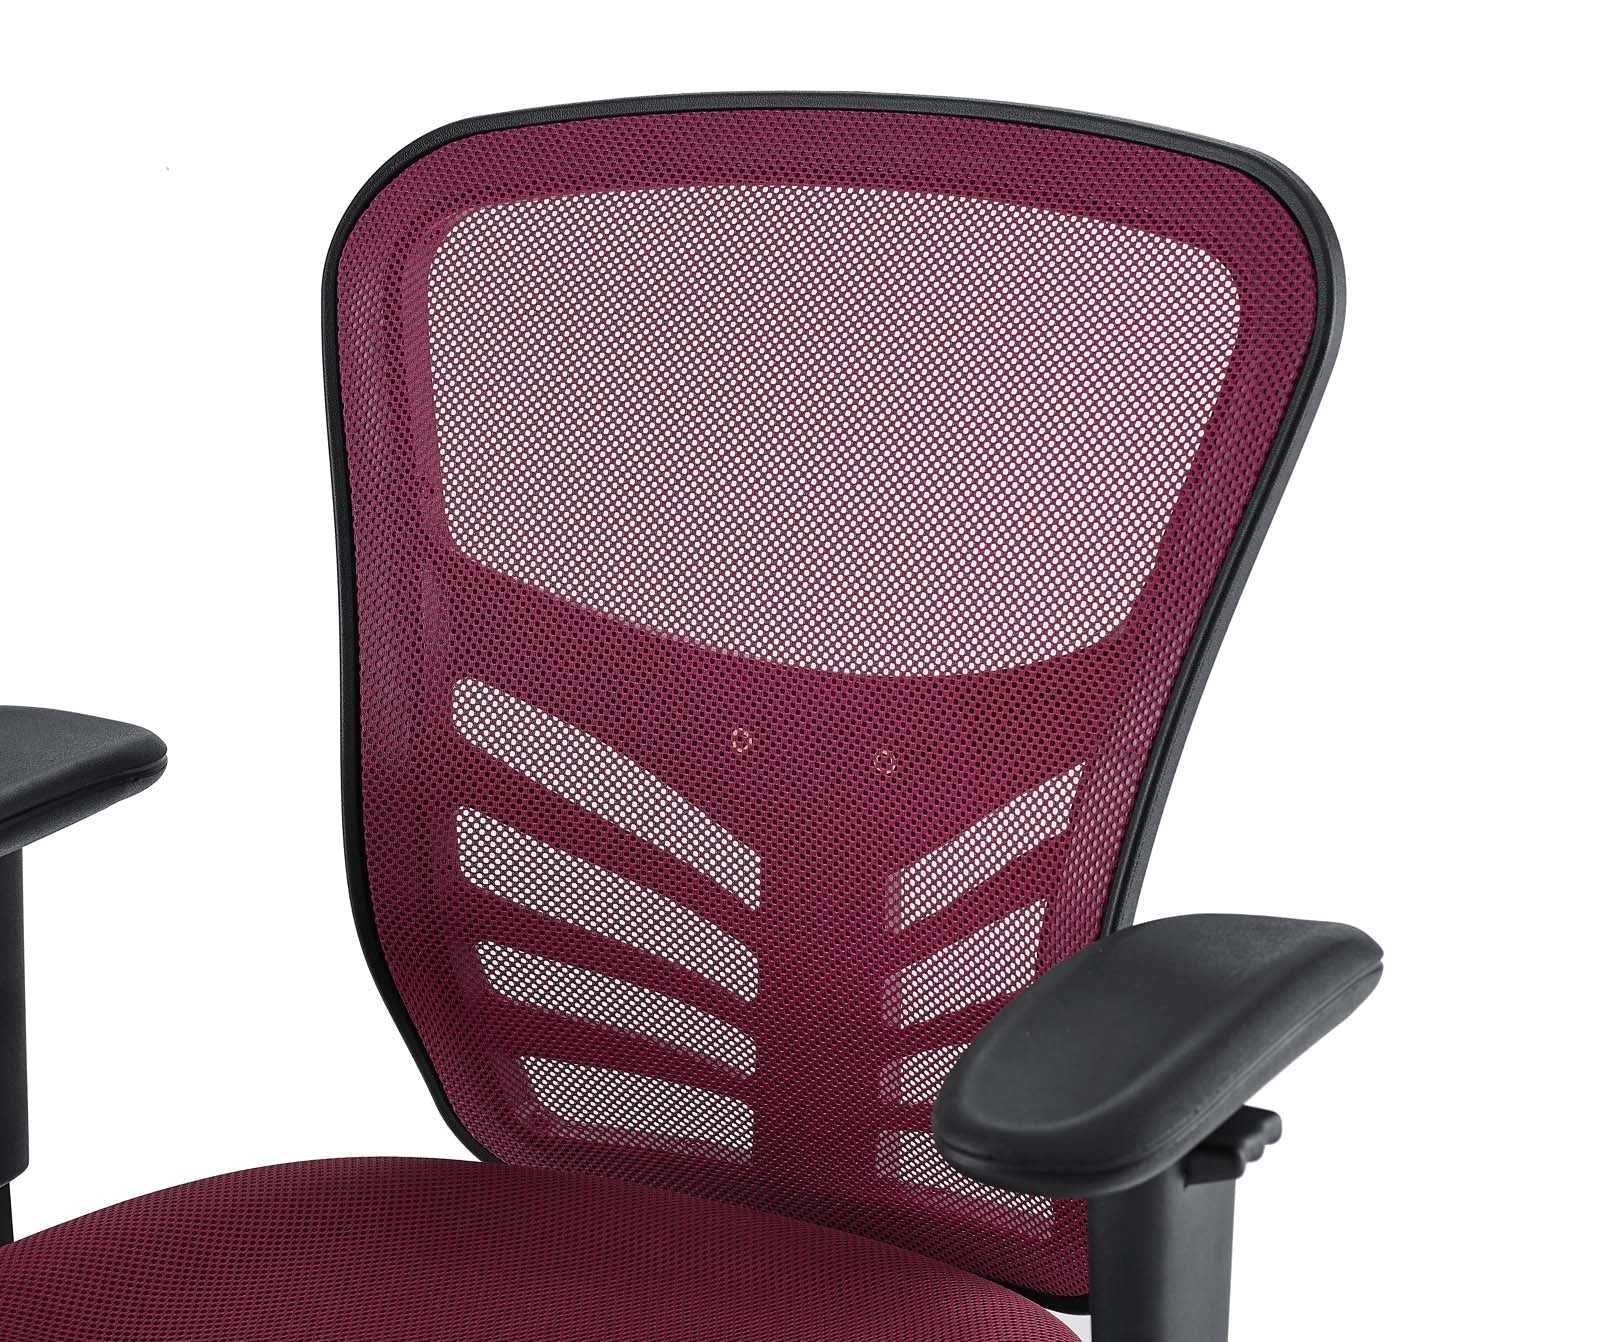 Lorell Adjustable Mesh Office Chair